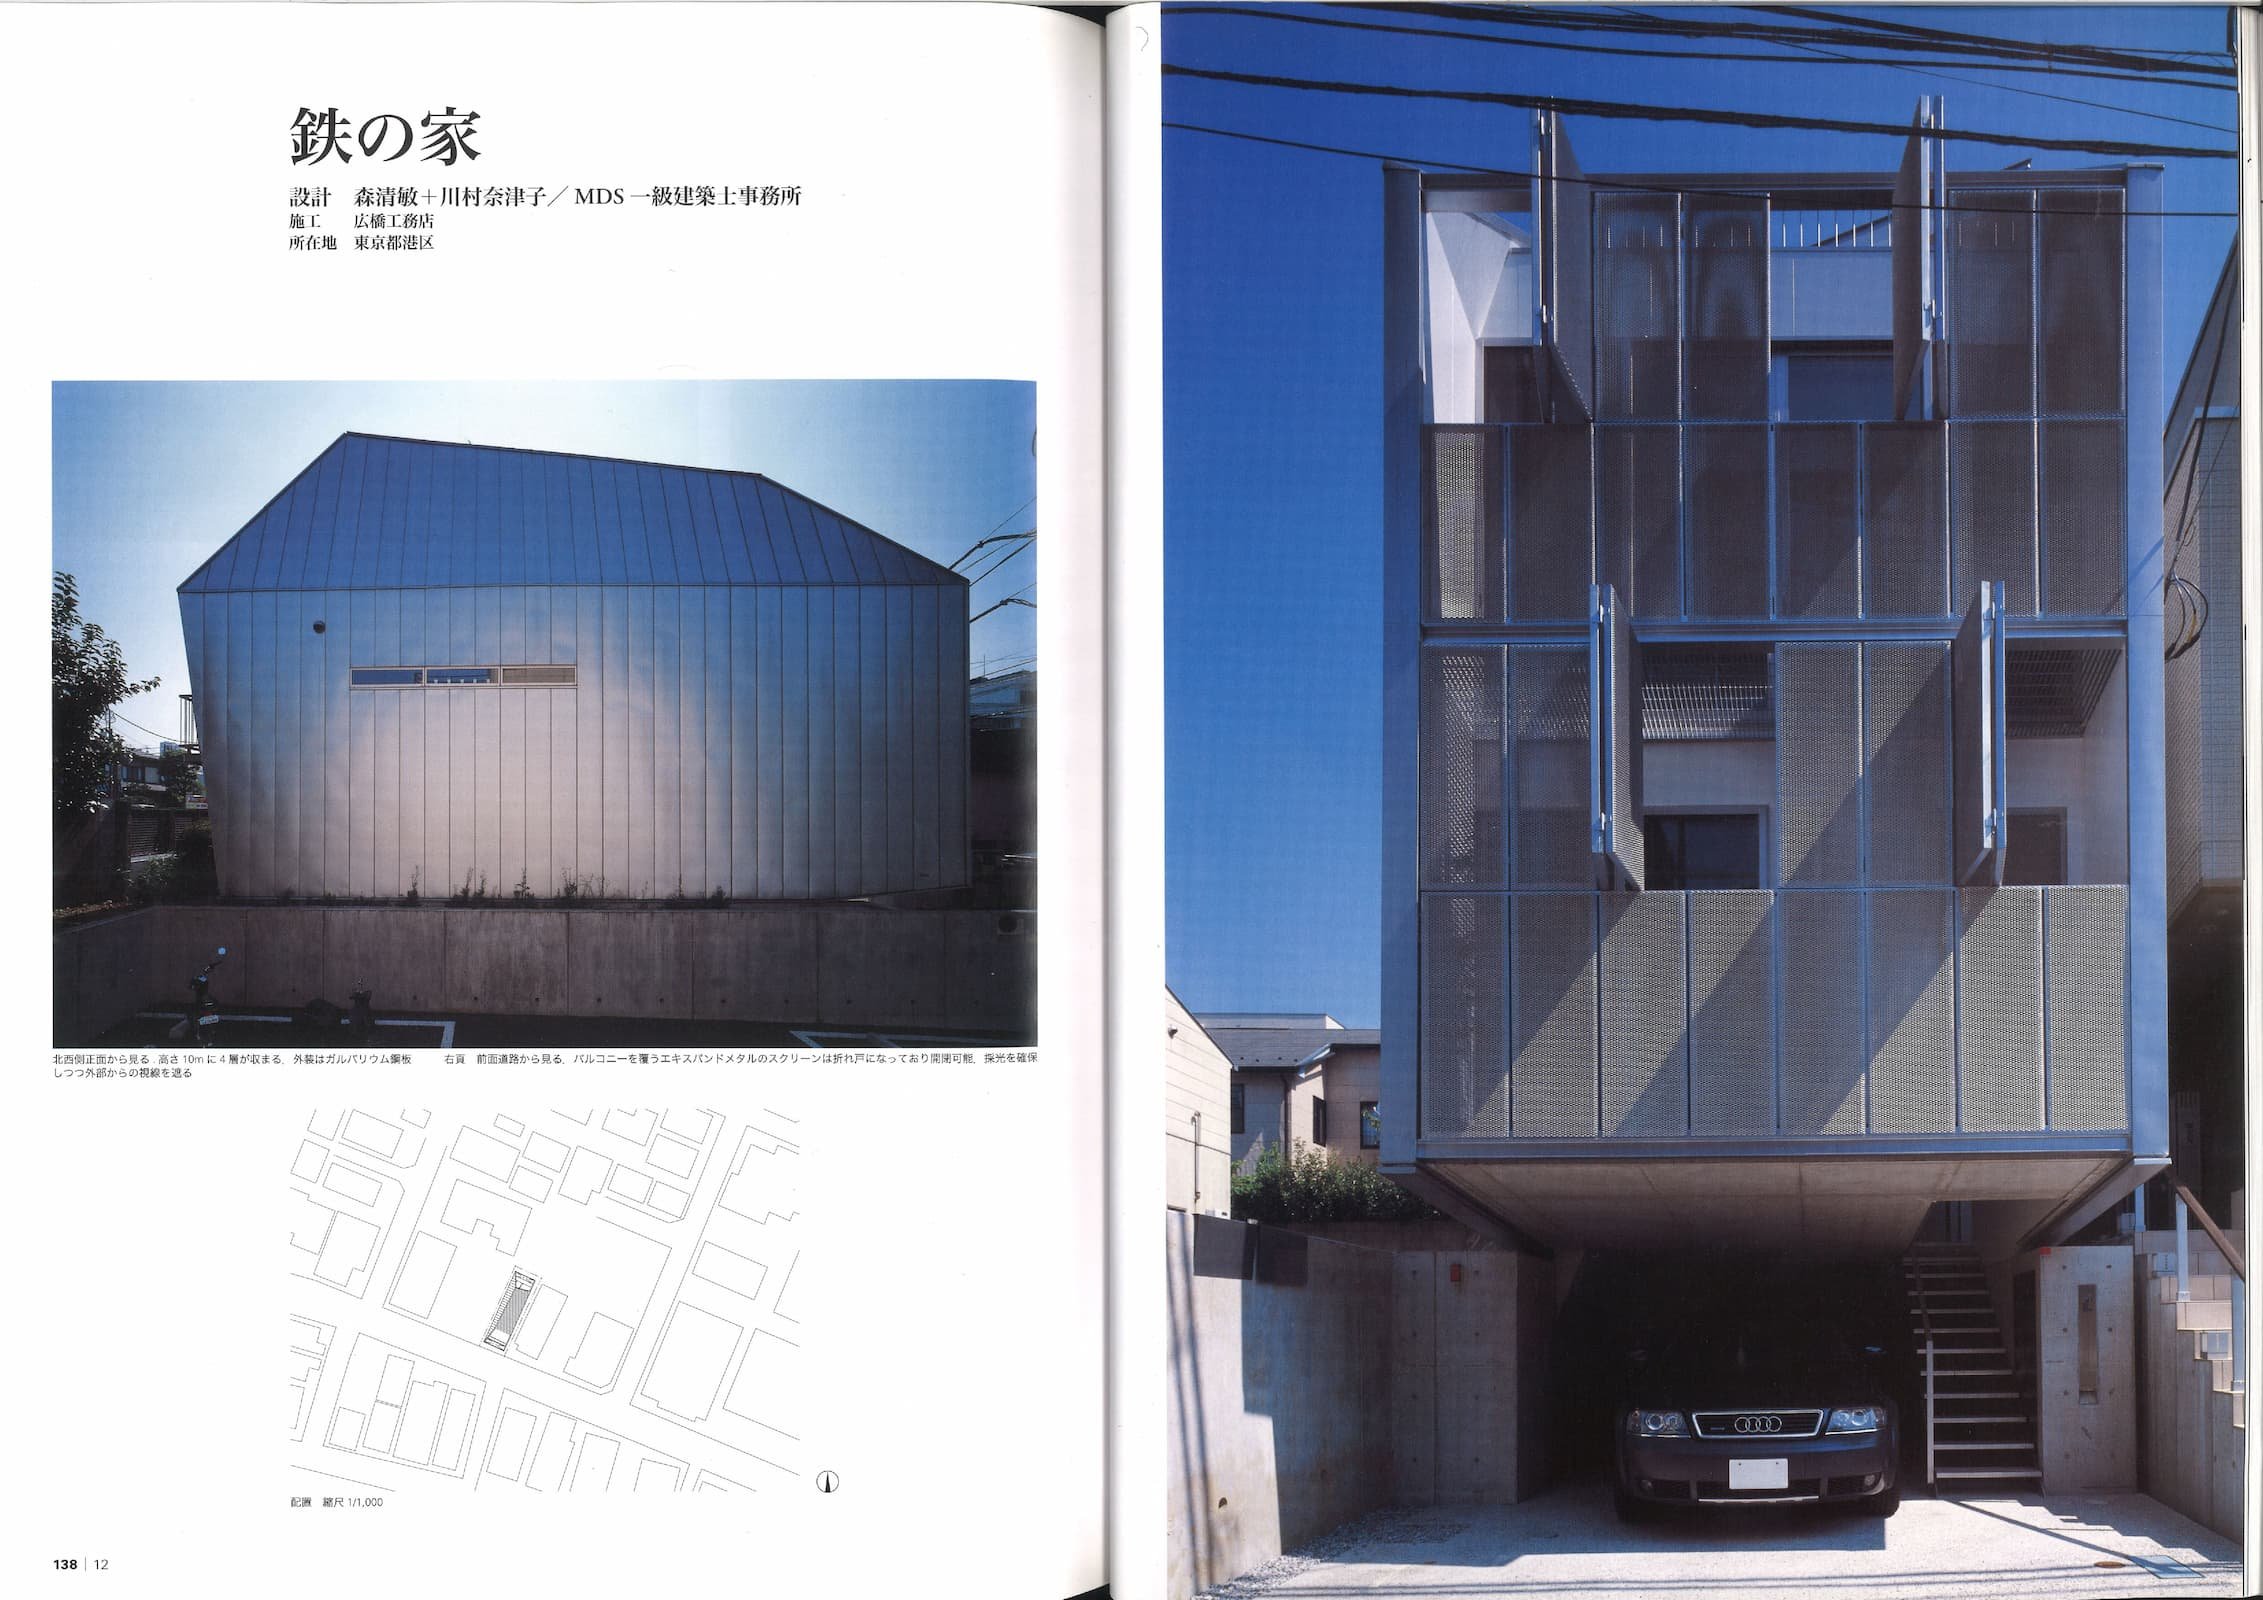 住宅特集 - Housing Special Feature 260 - FU House + Iron House_Page_6.jpg